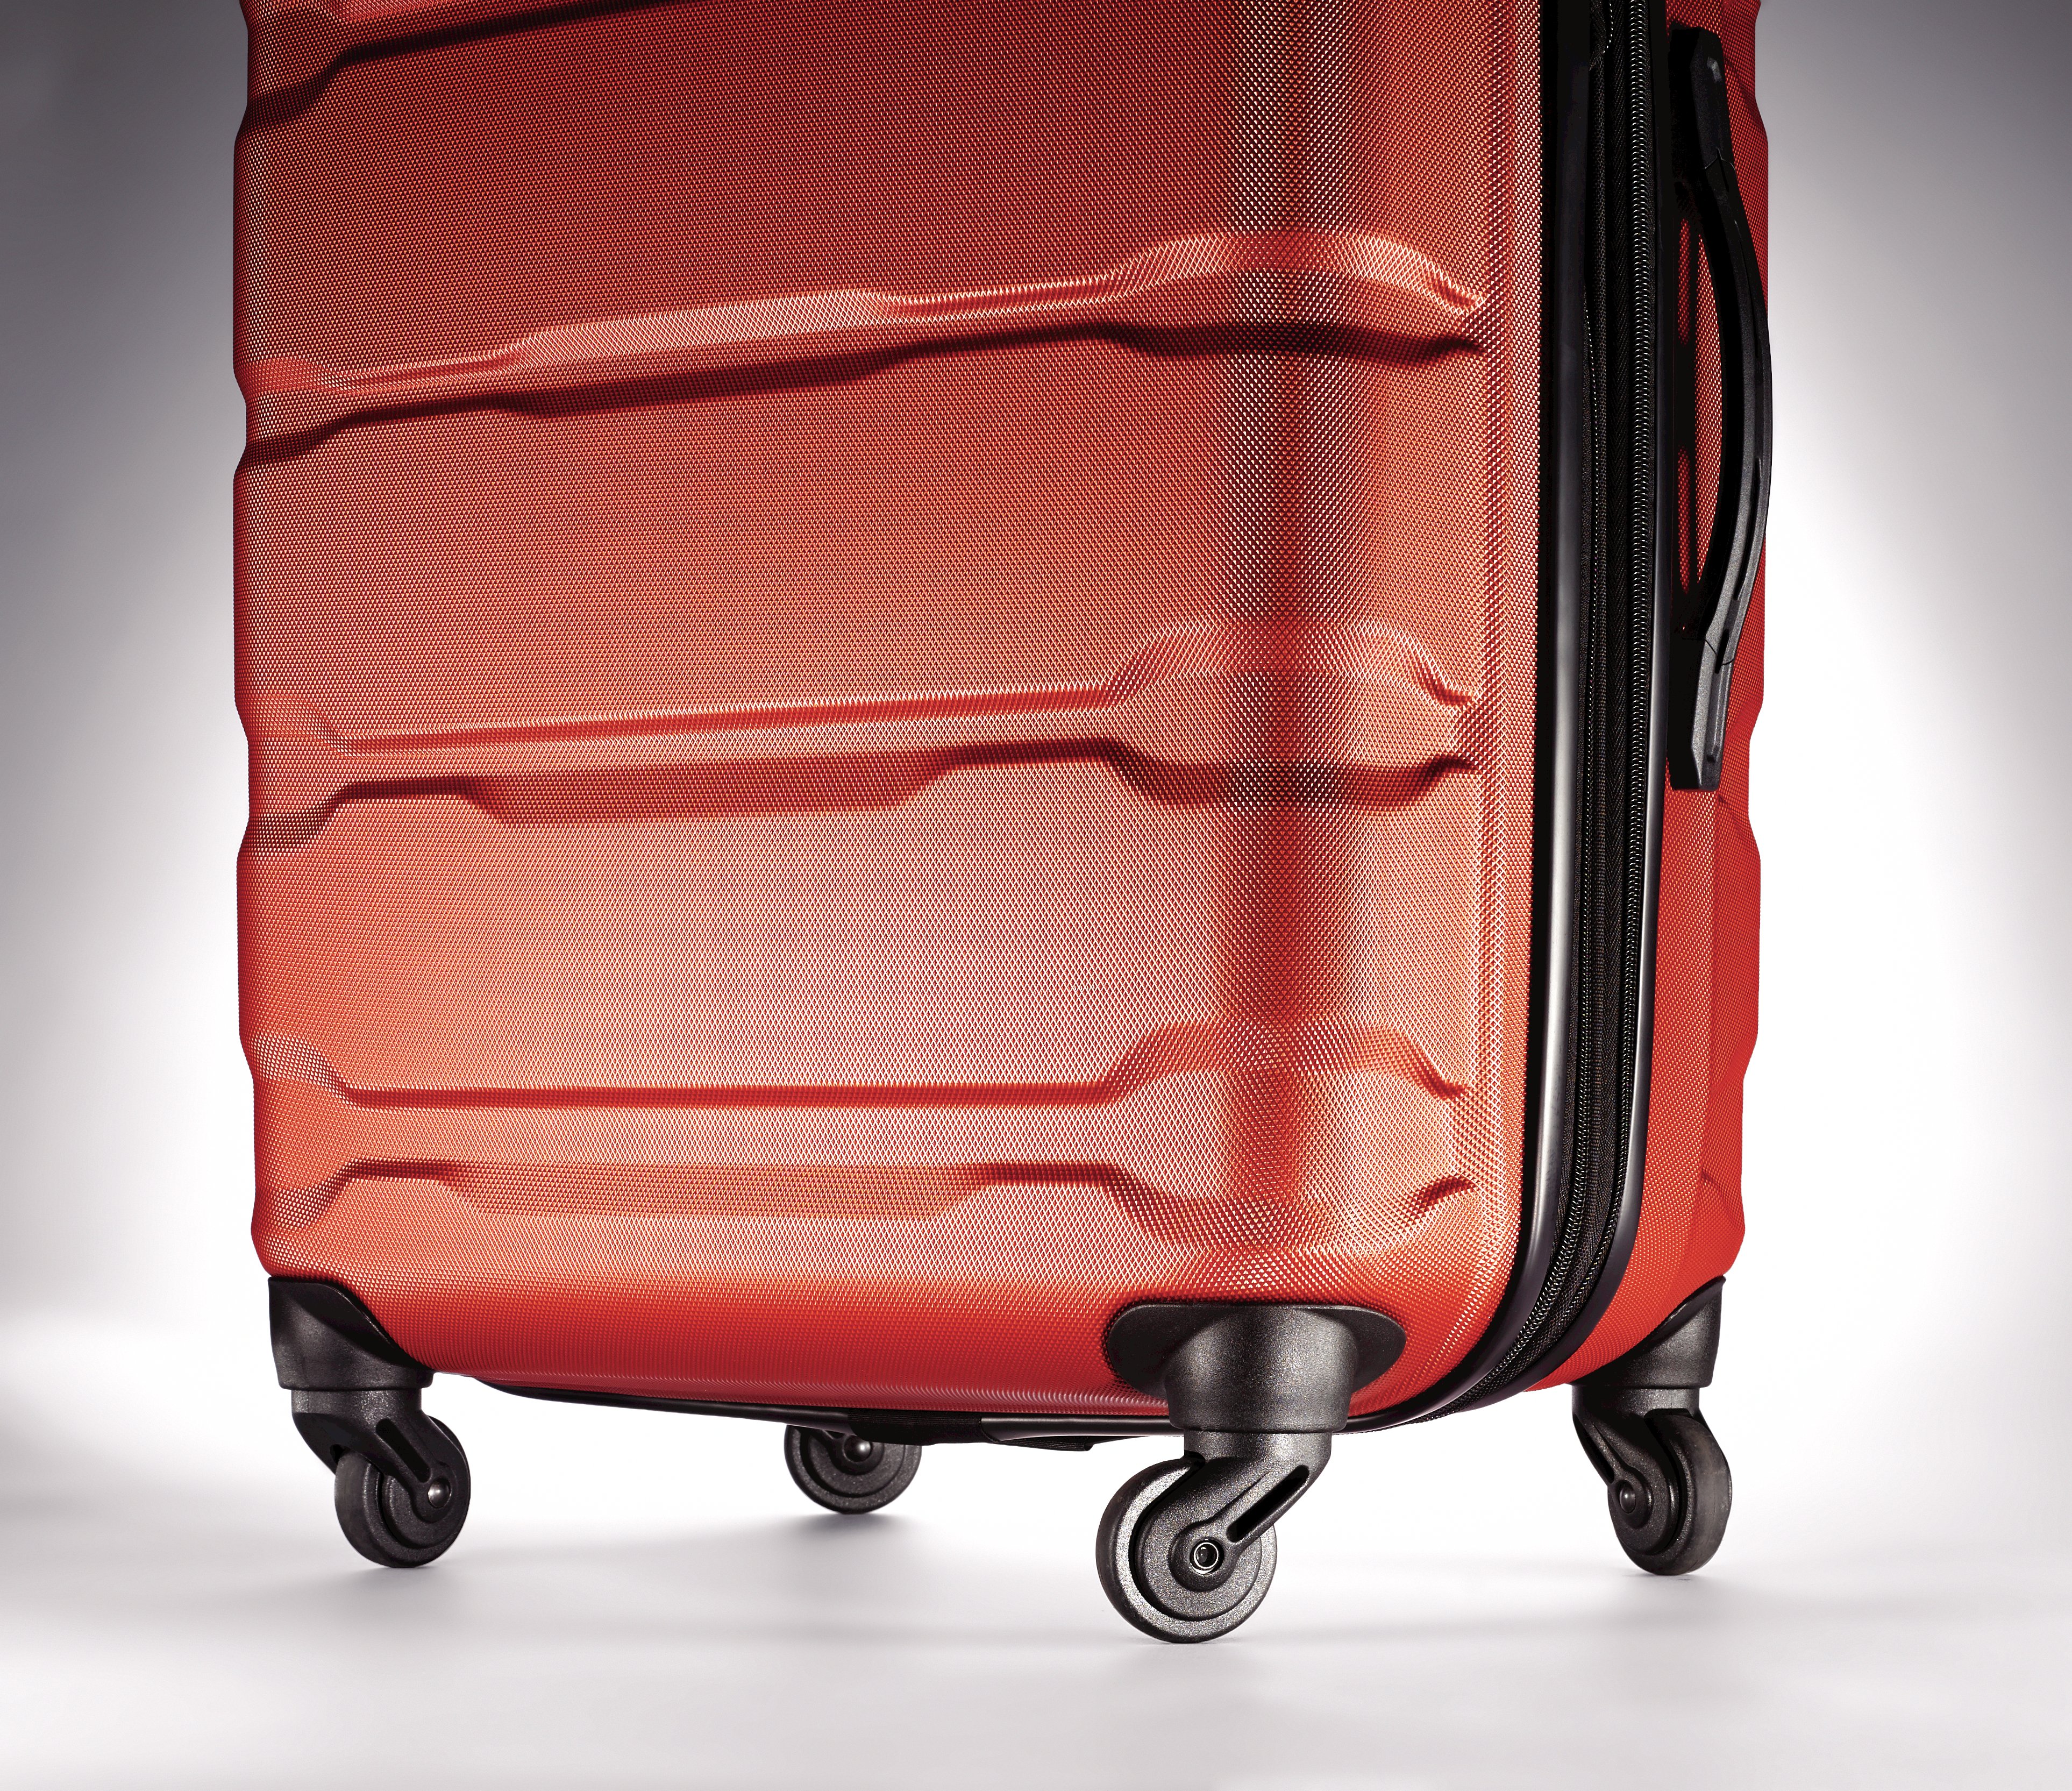 Samsonite Omni PC Hardside Expandable Luggage with Spinner Wheels